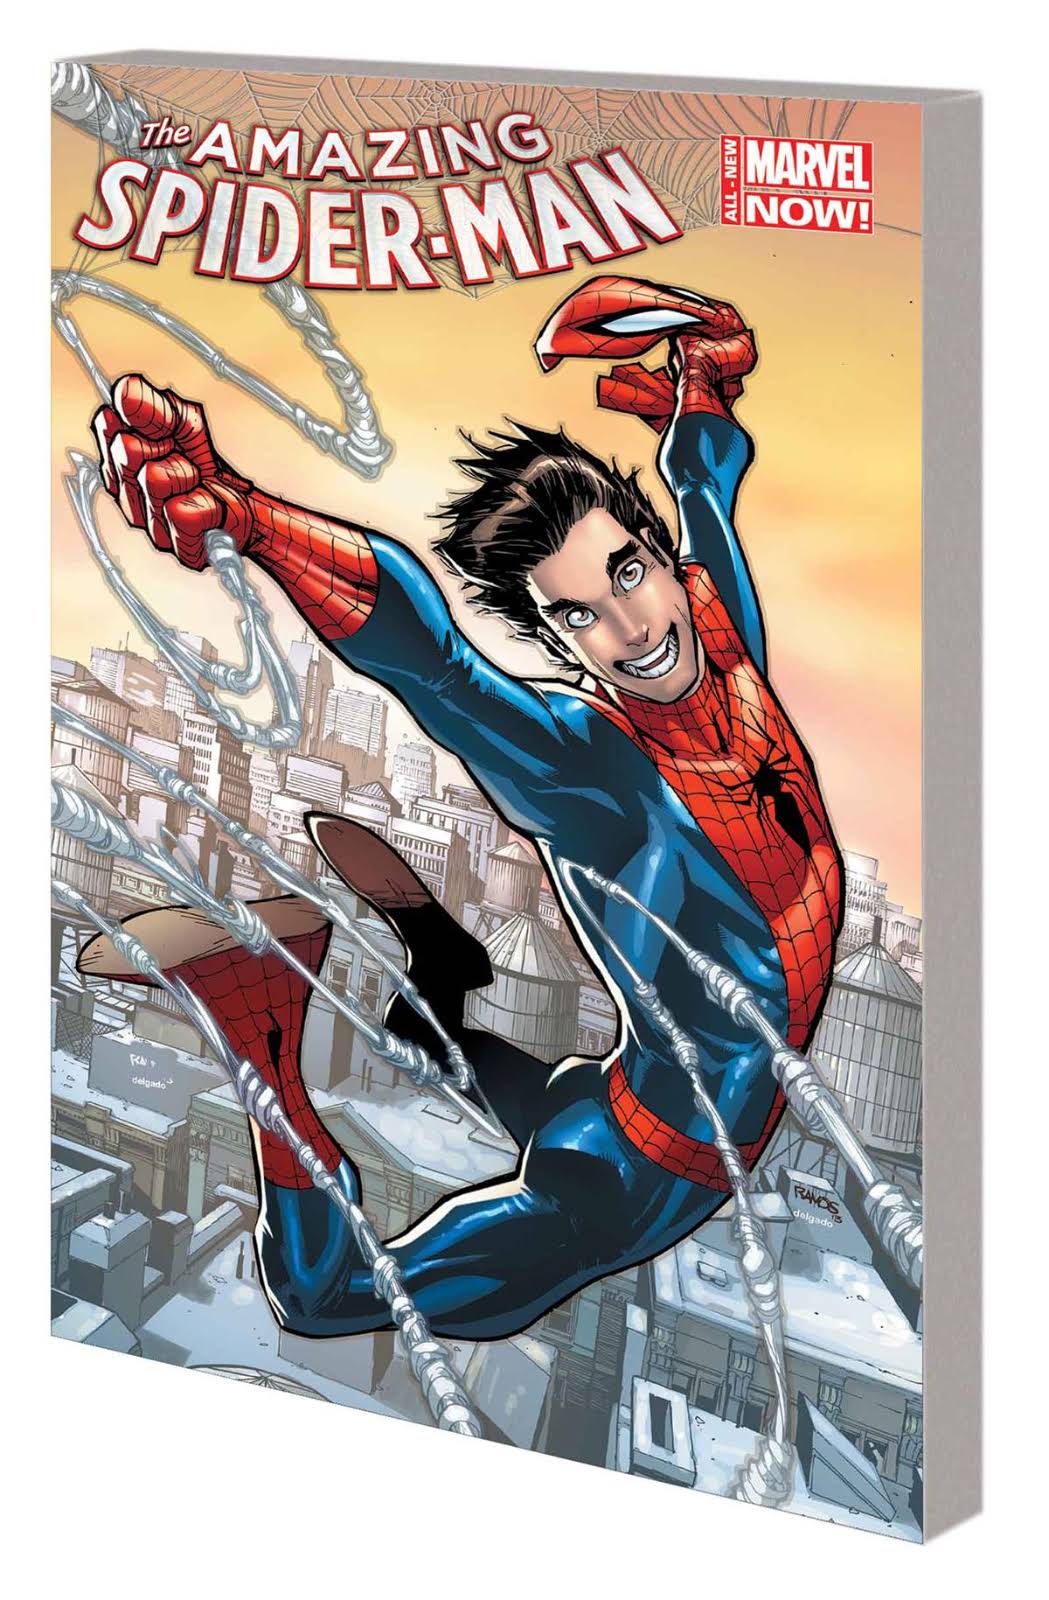 The Amazing Spider-Man #01 - Marvel